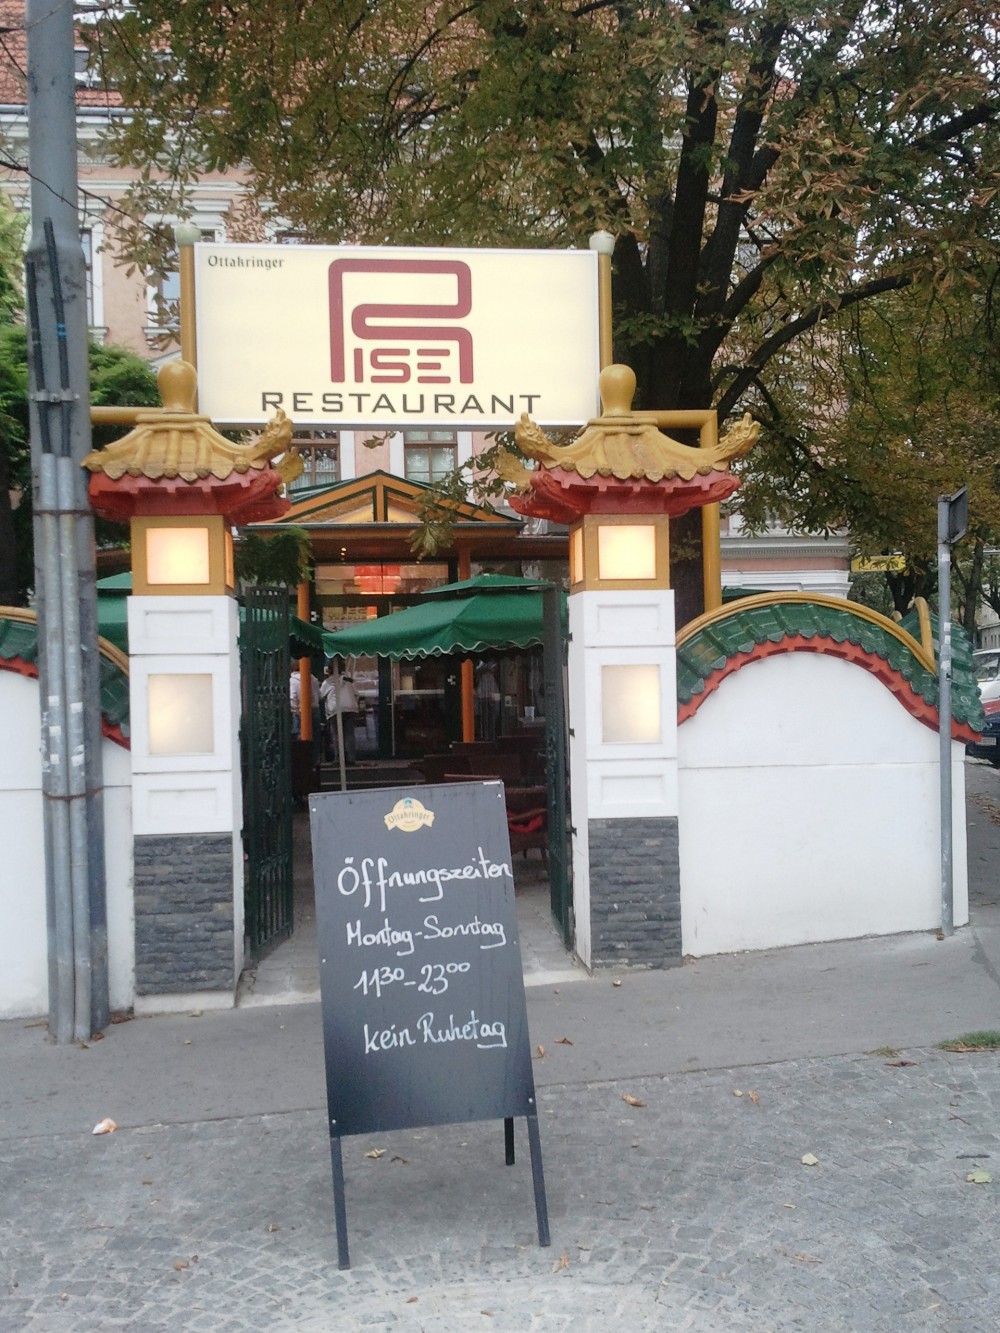 RISE Restaurant - Wien